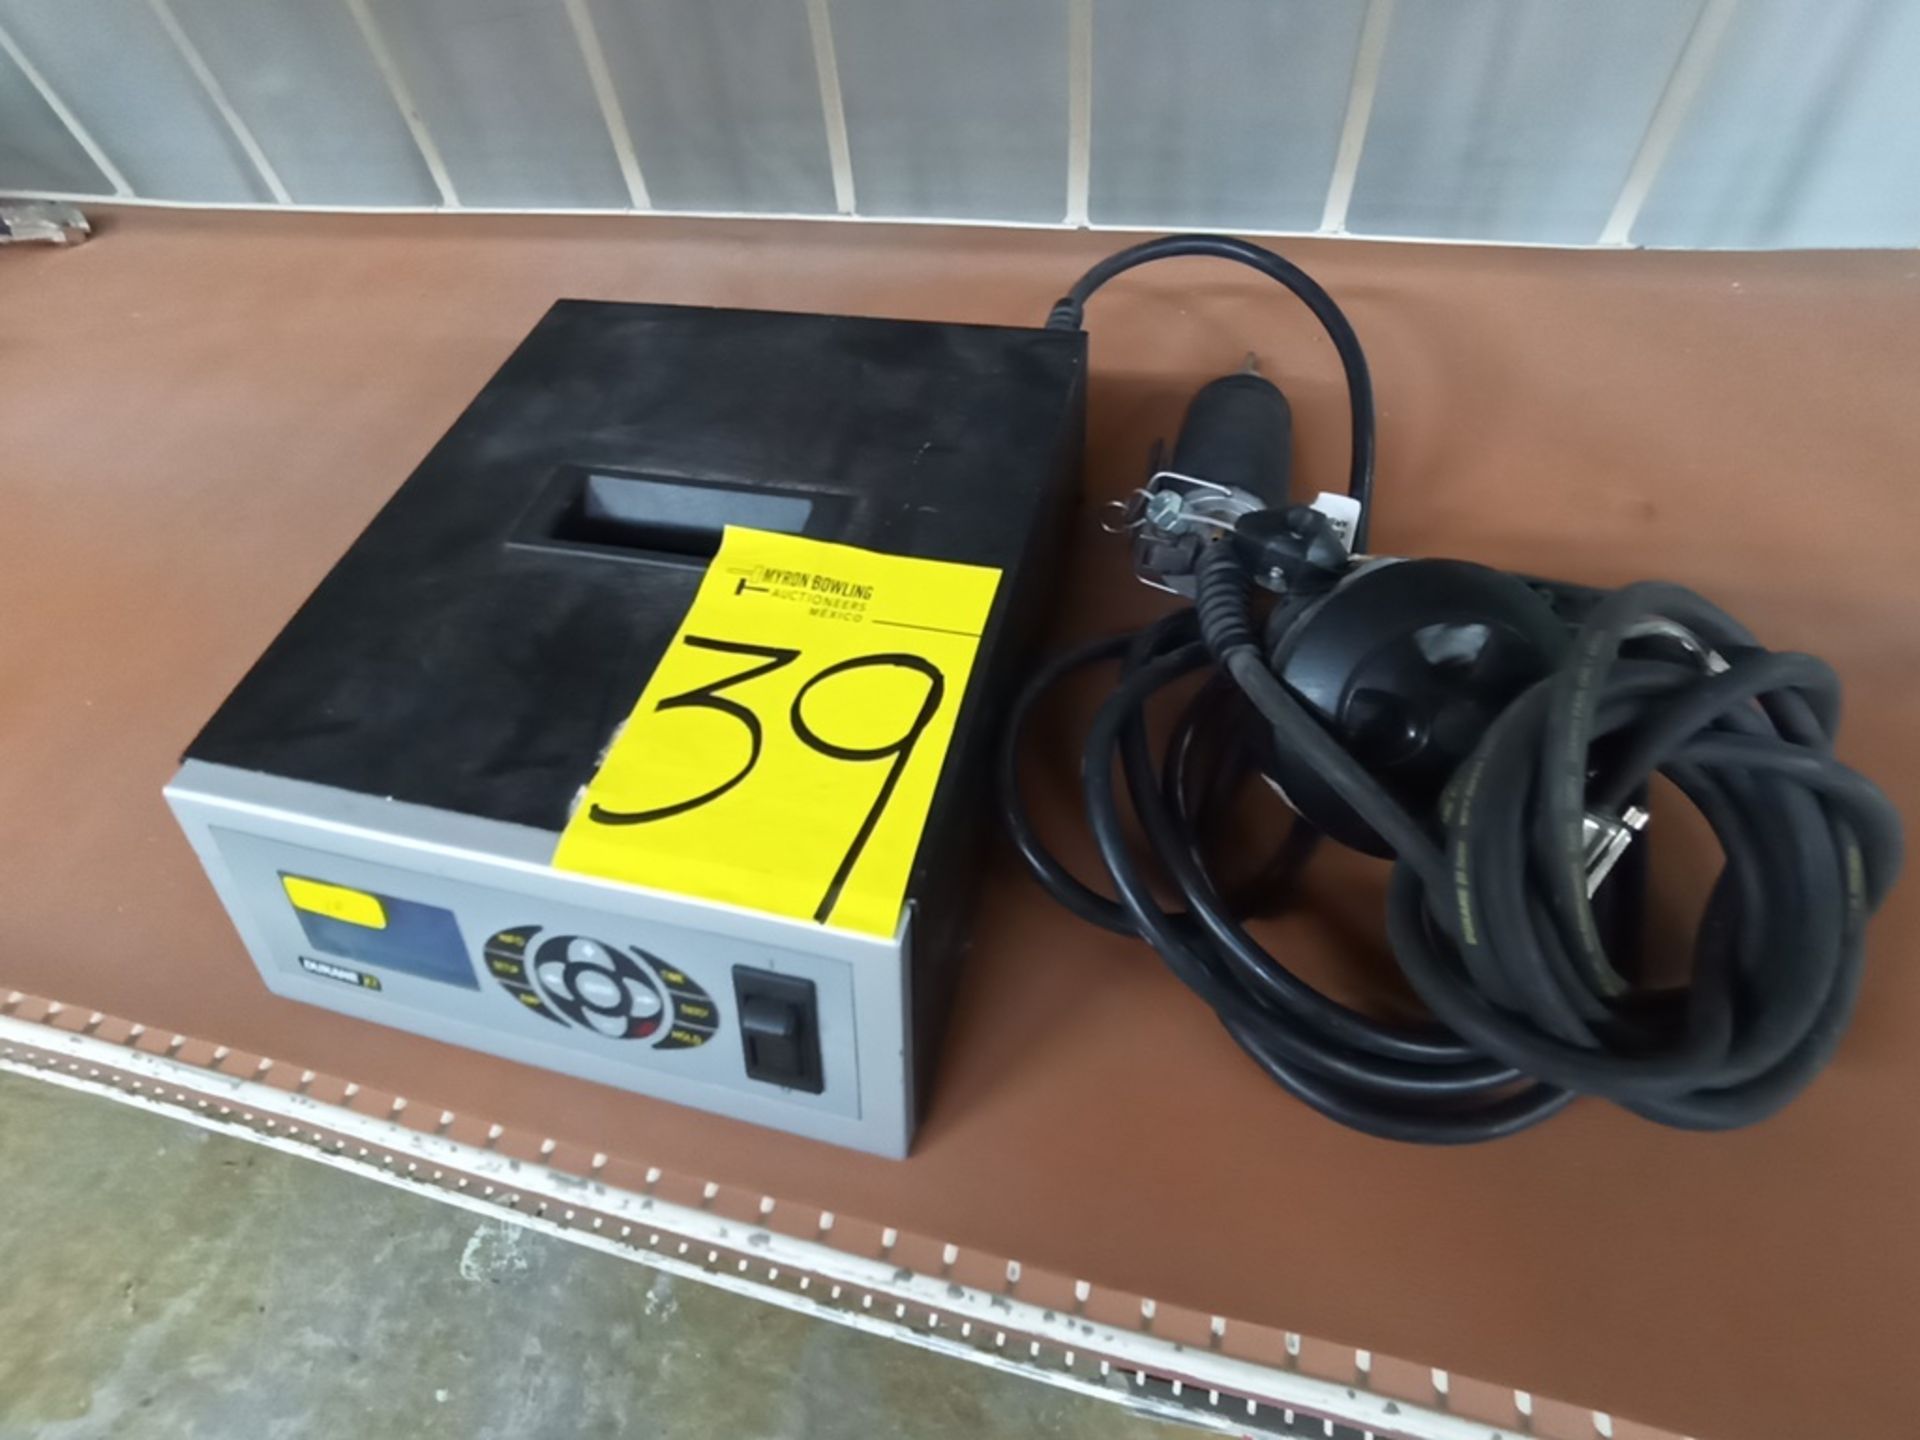 Ultrasonic Portable Welding System Series iQ Model iQ EZ Serial No 251960 110V/60Hz - Image 8 of 10